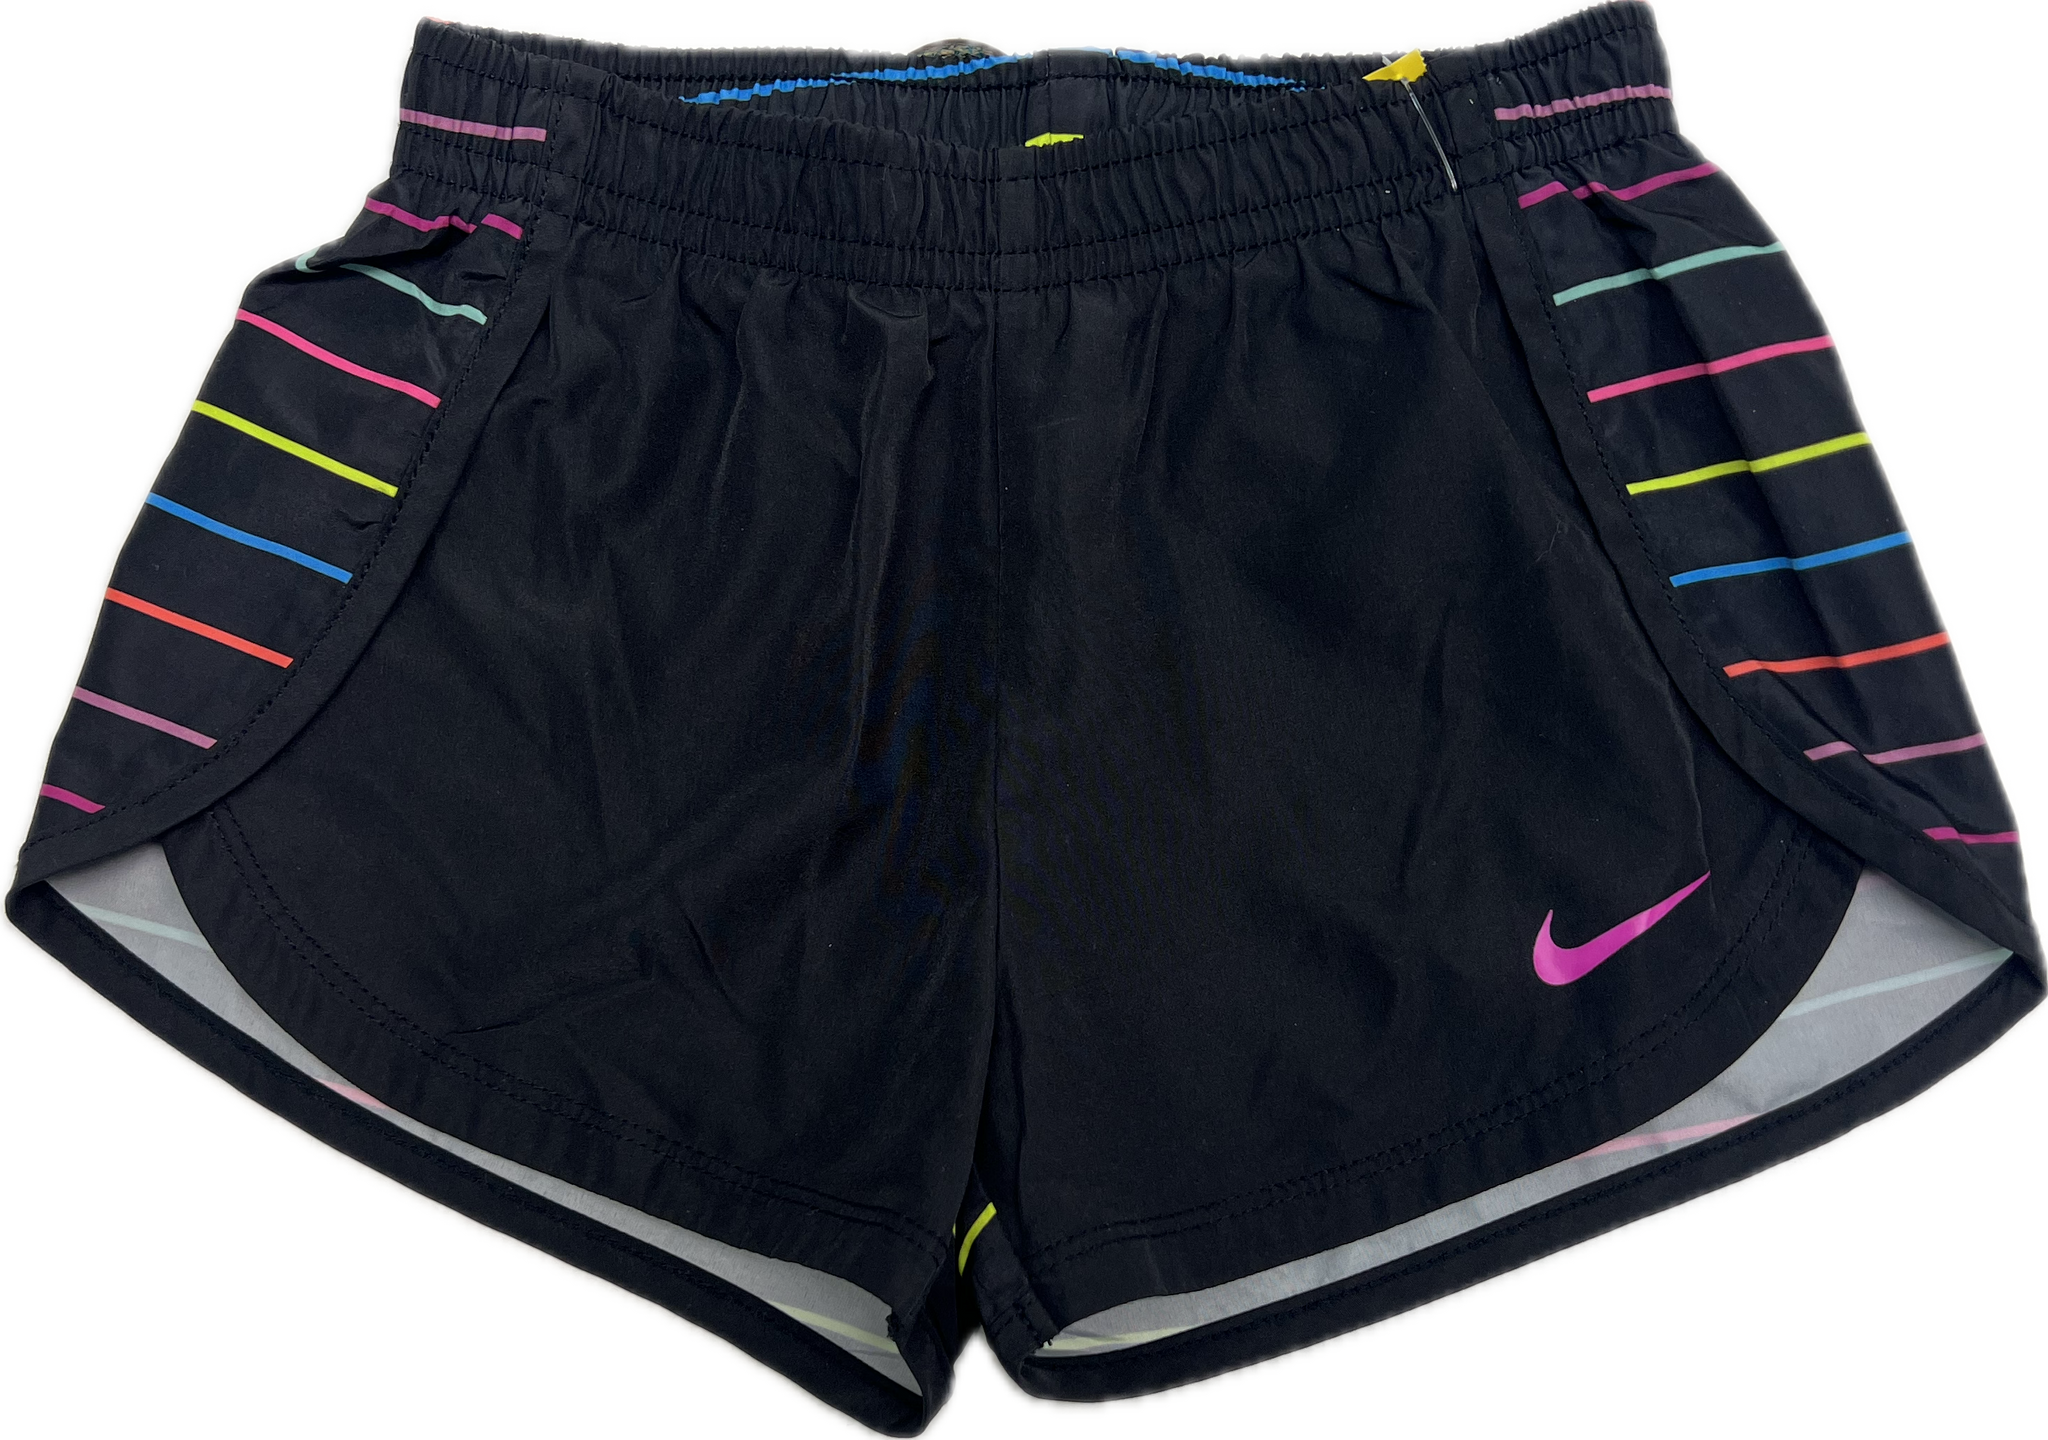 Girls Infant 24 MO Nike Dri fit Shorts